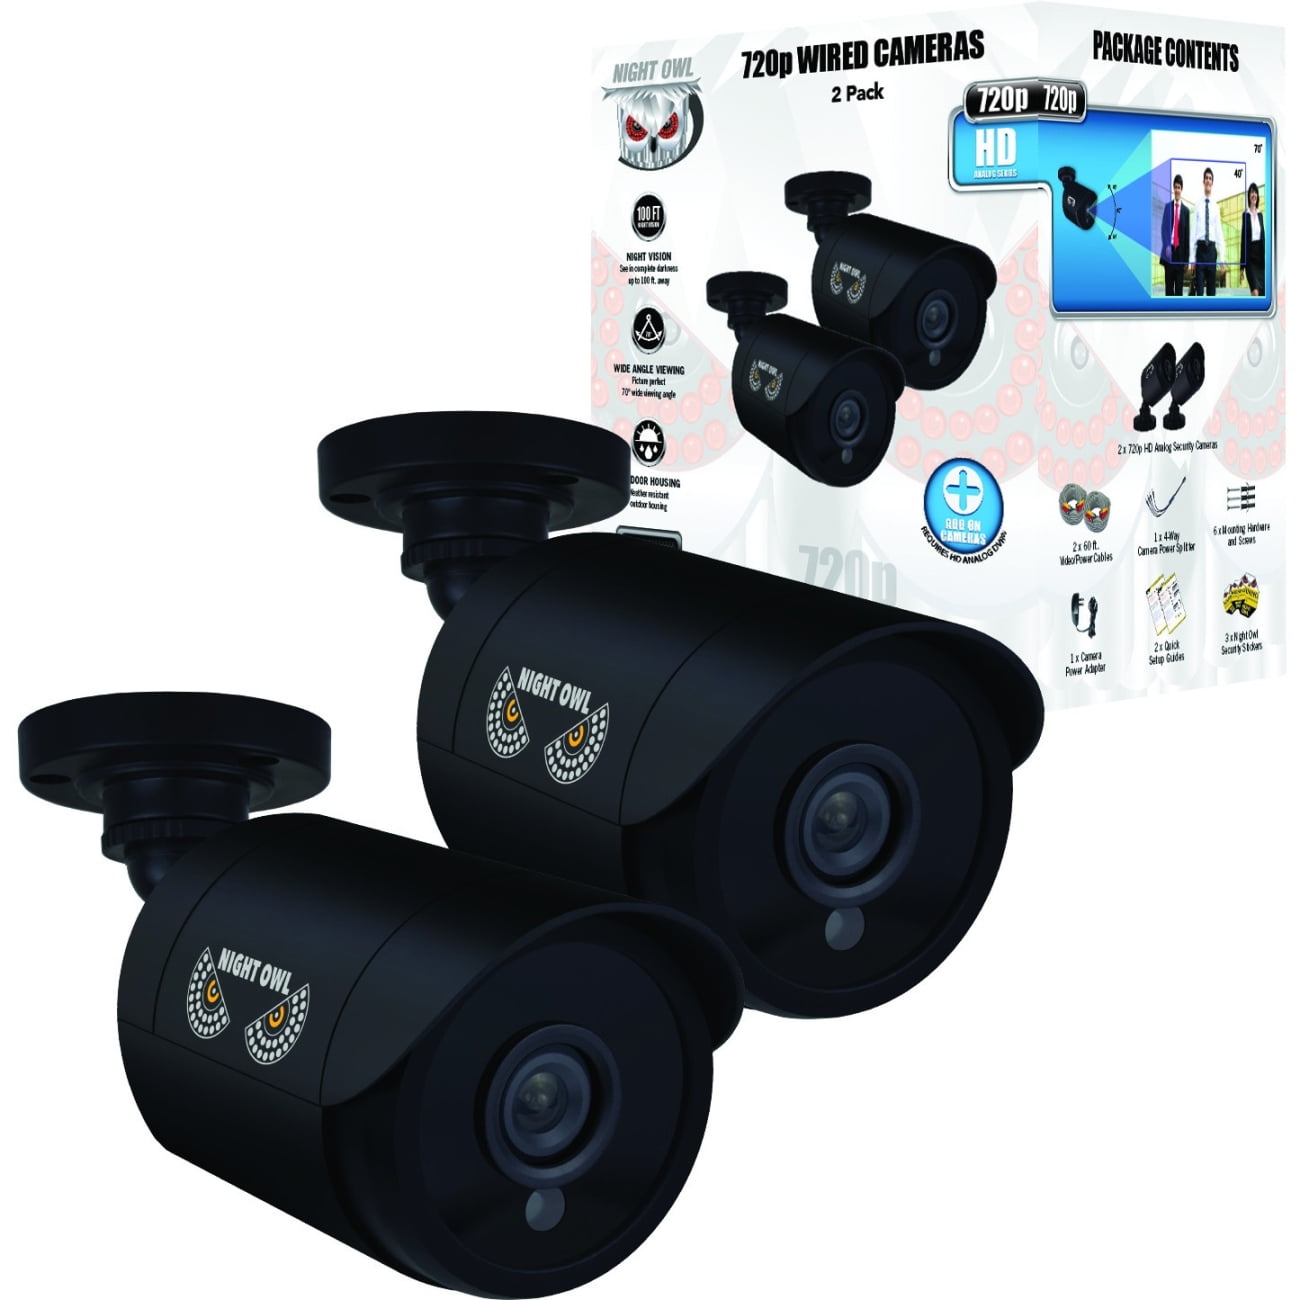 night owl security cameras wireless